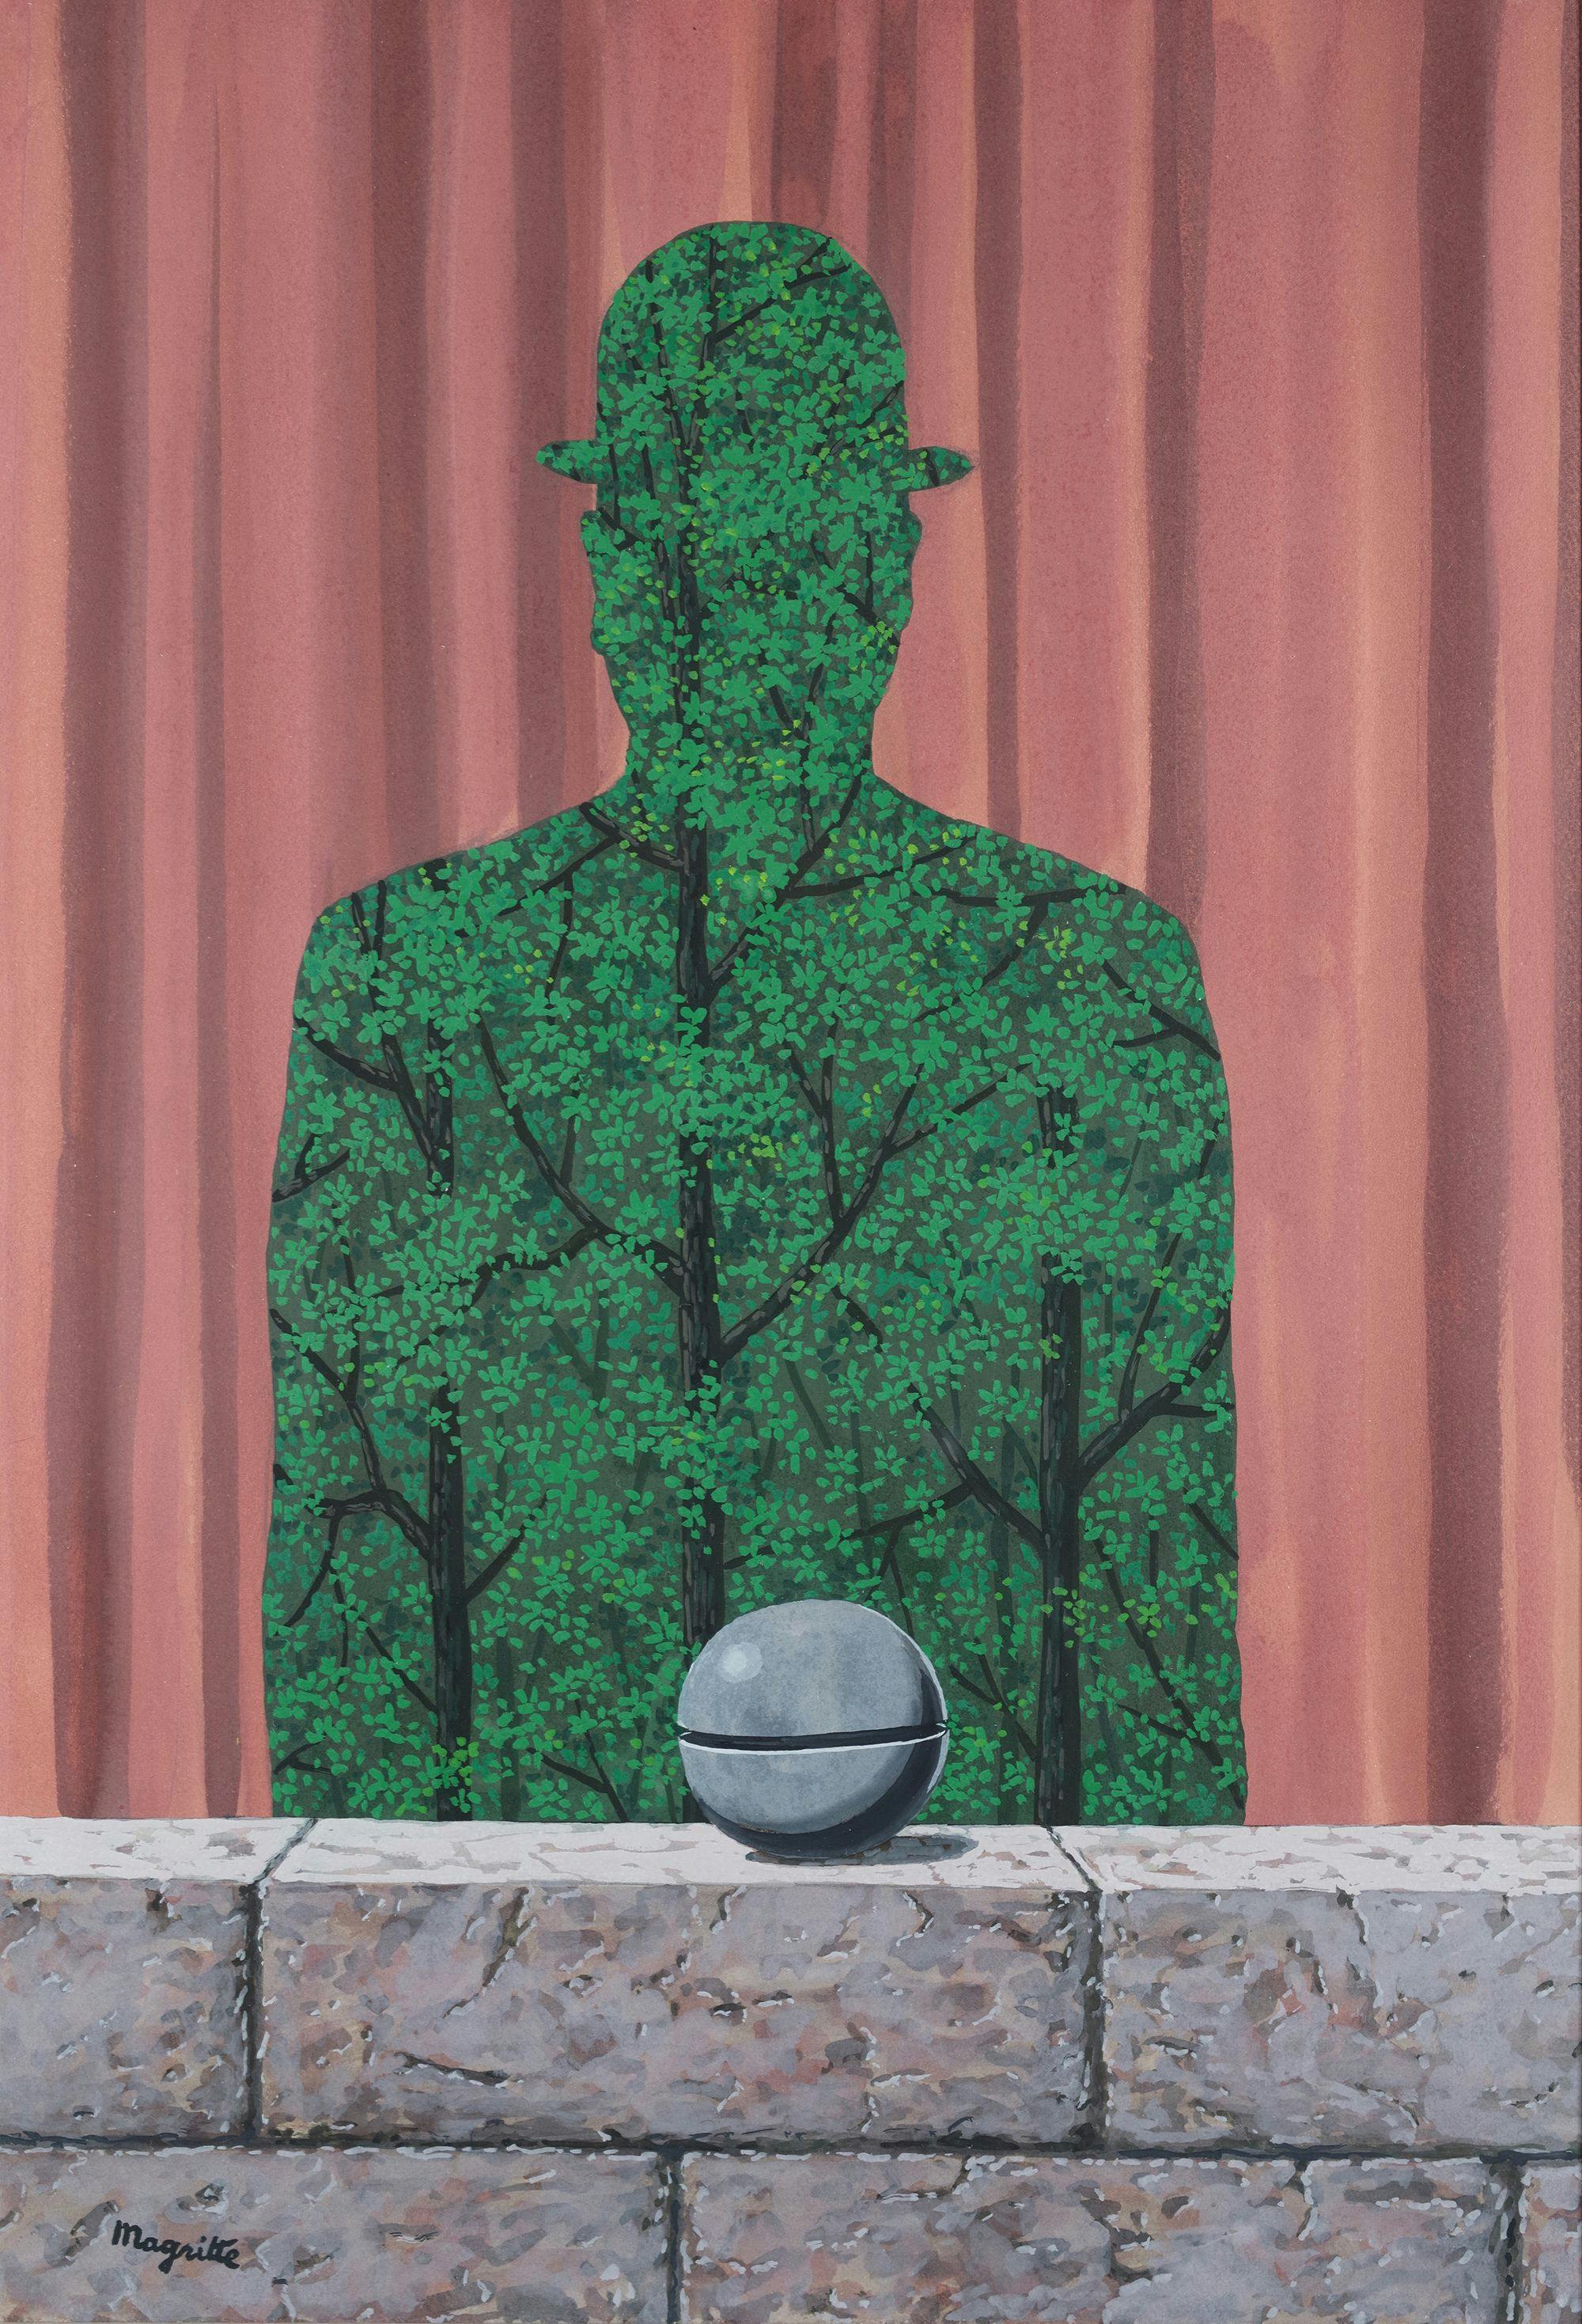 René Magritte, L’homme et la forêt, ca 1965 (Private Collection) © La Fondation Magritte, Bildupphovsrätt, Stockholm 2022